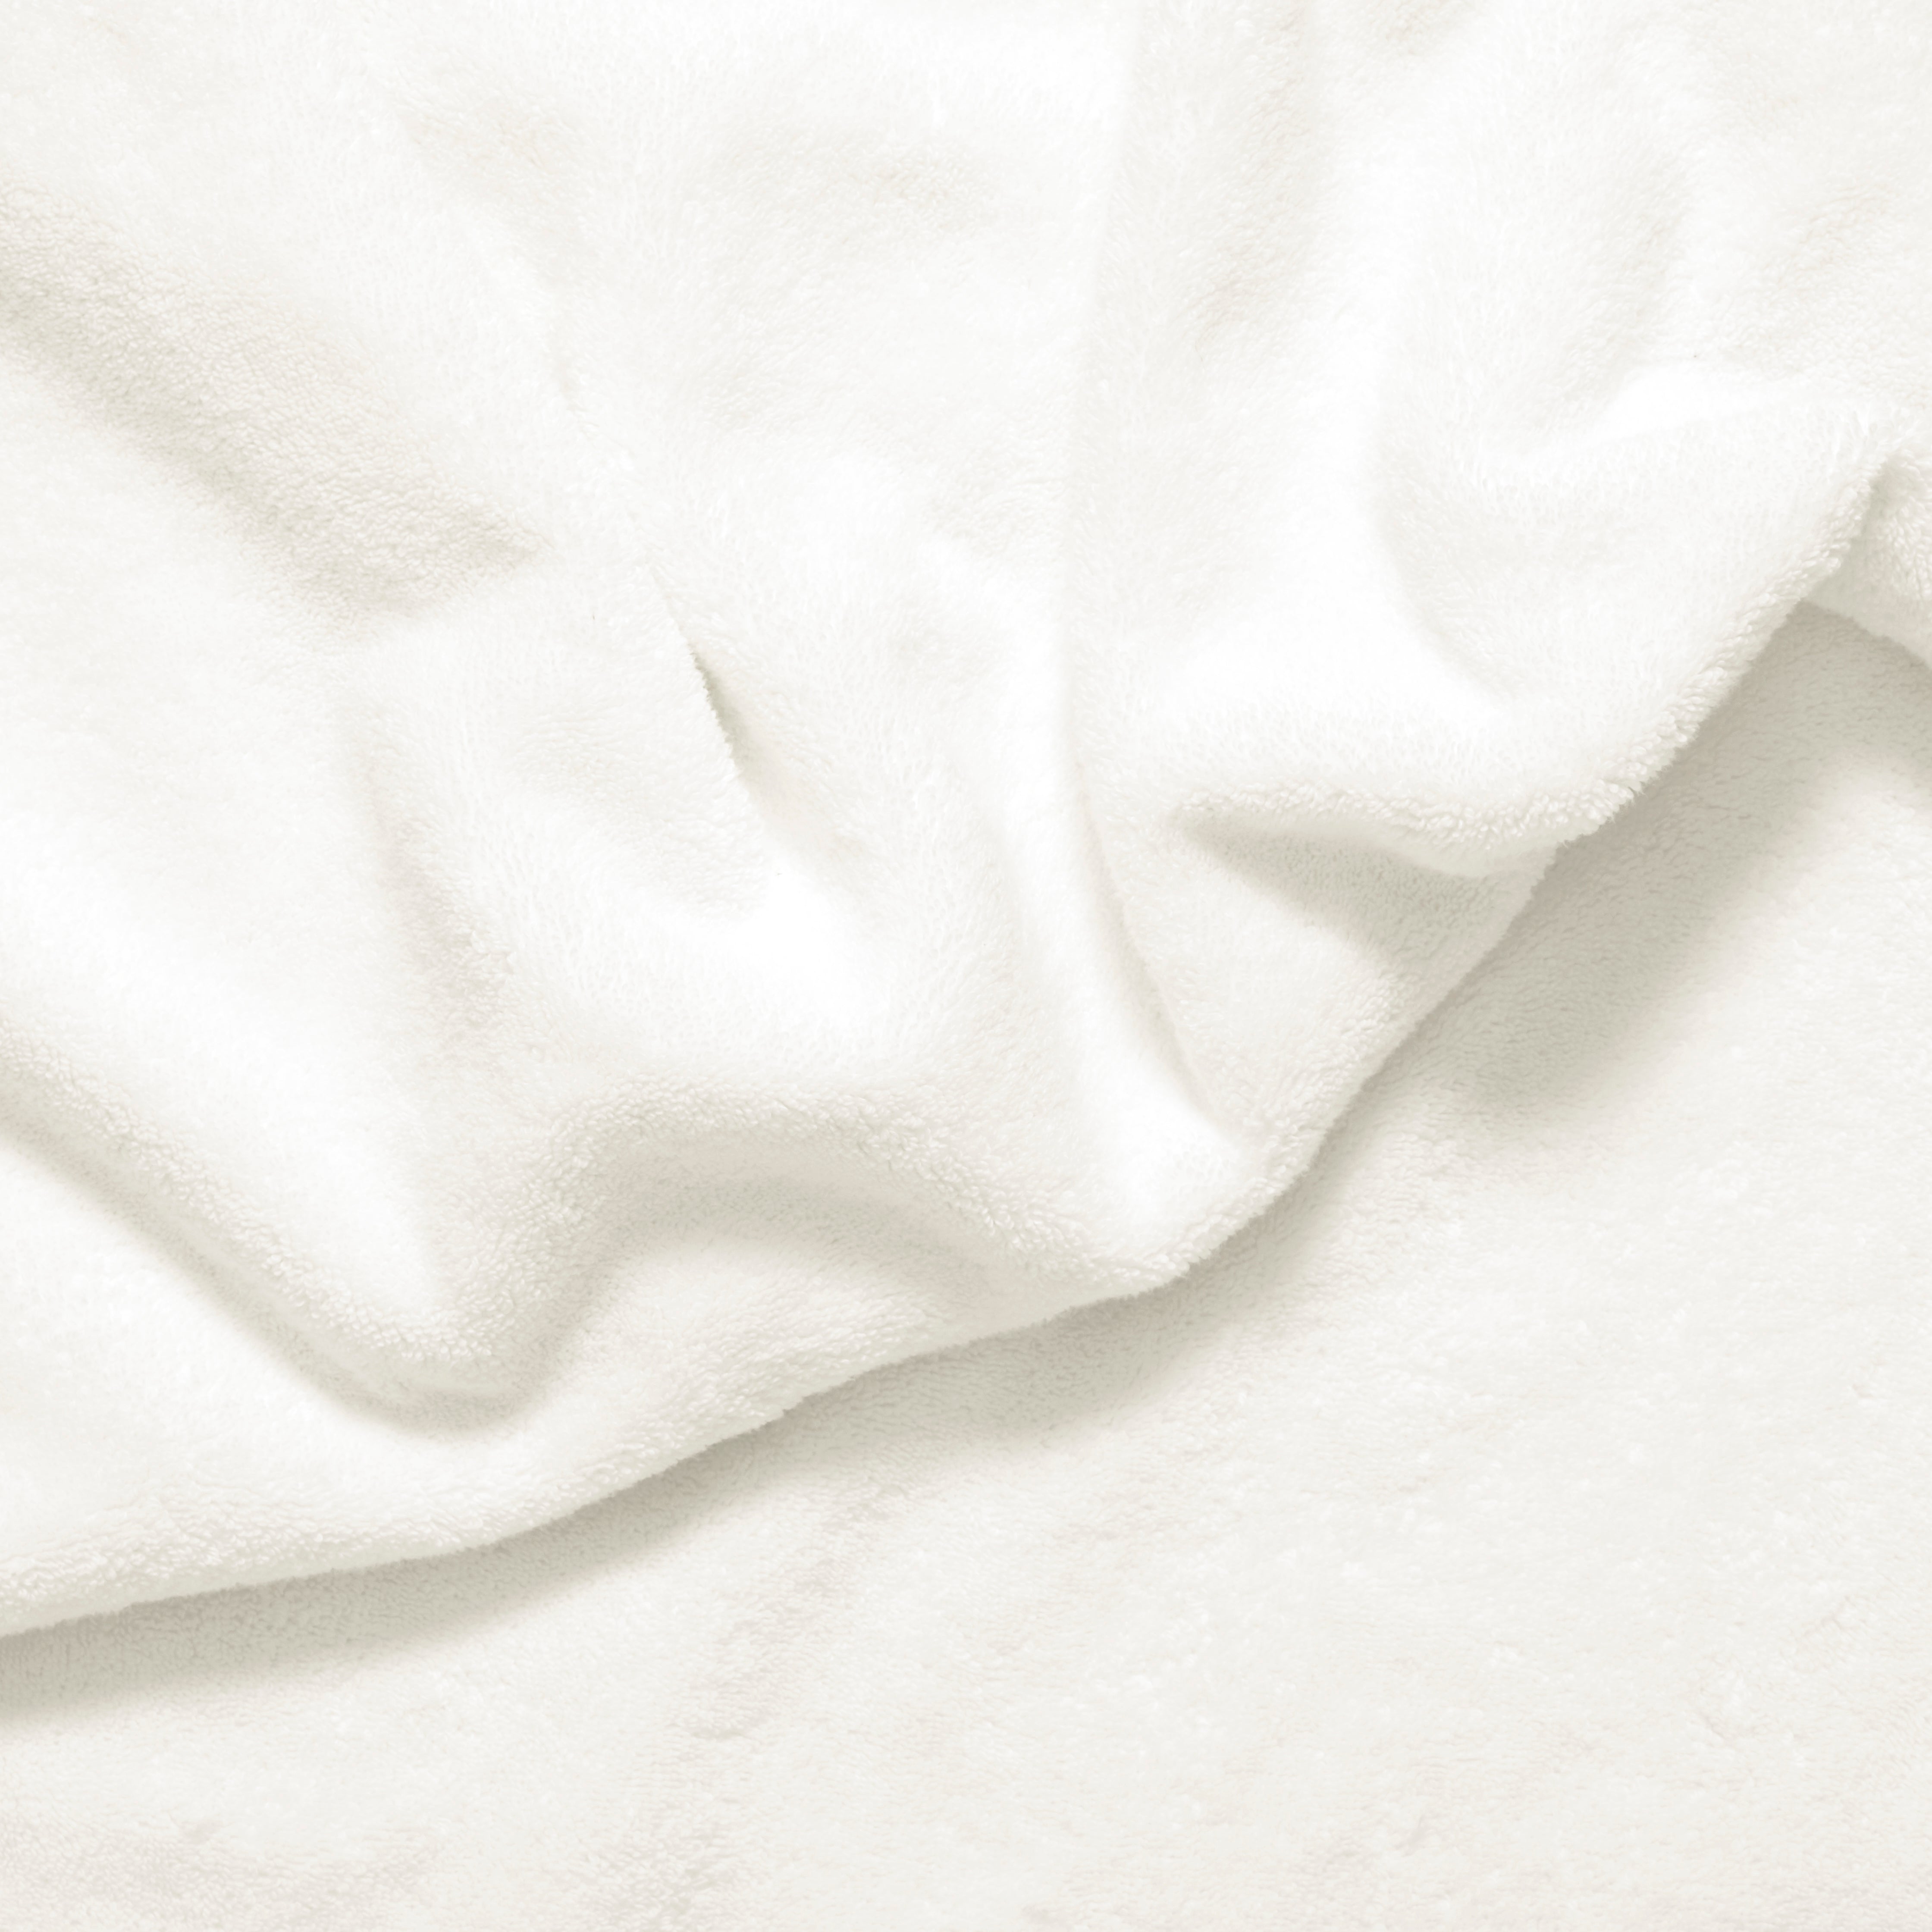 Close up image of a white super-plush towel